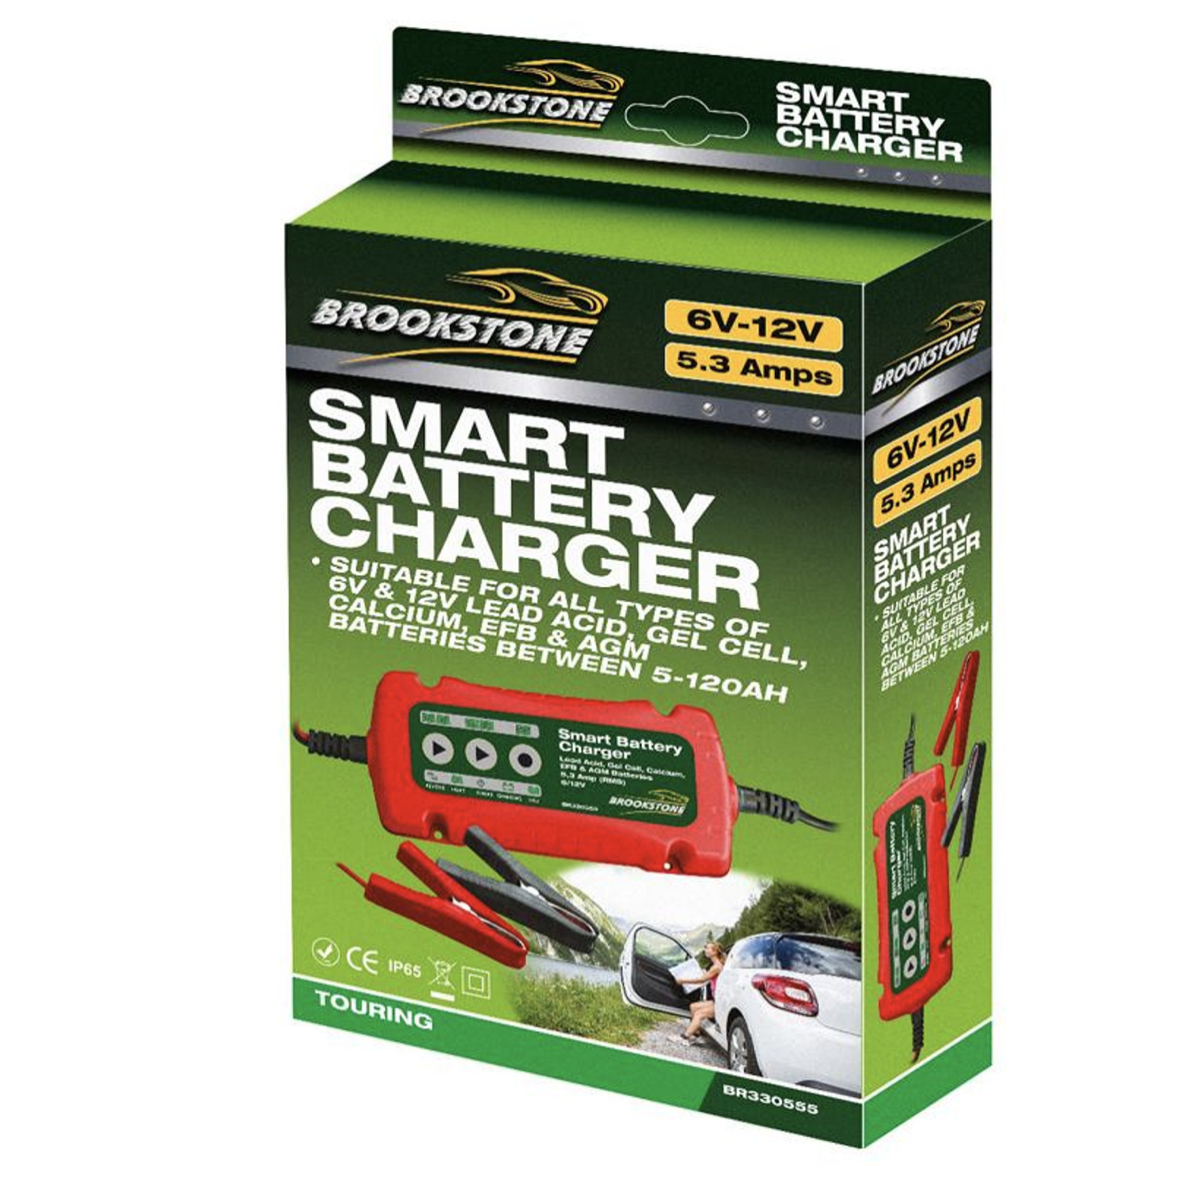 Brookstone Smart Battery Charger 6V-12V